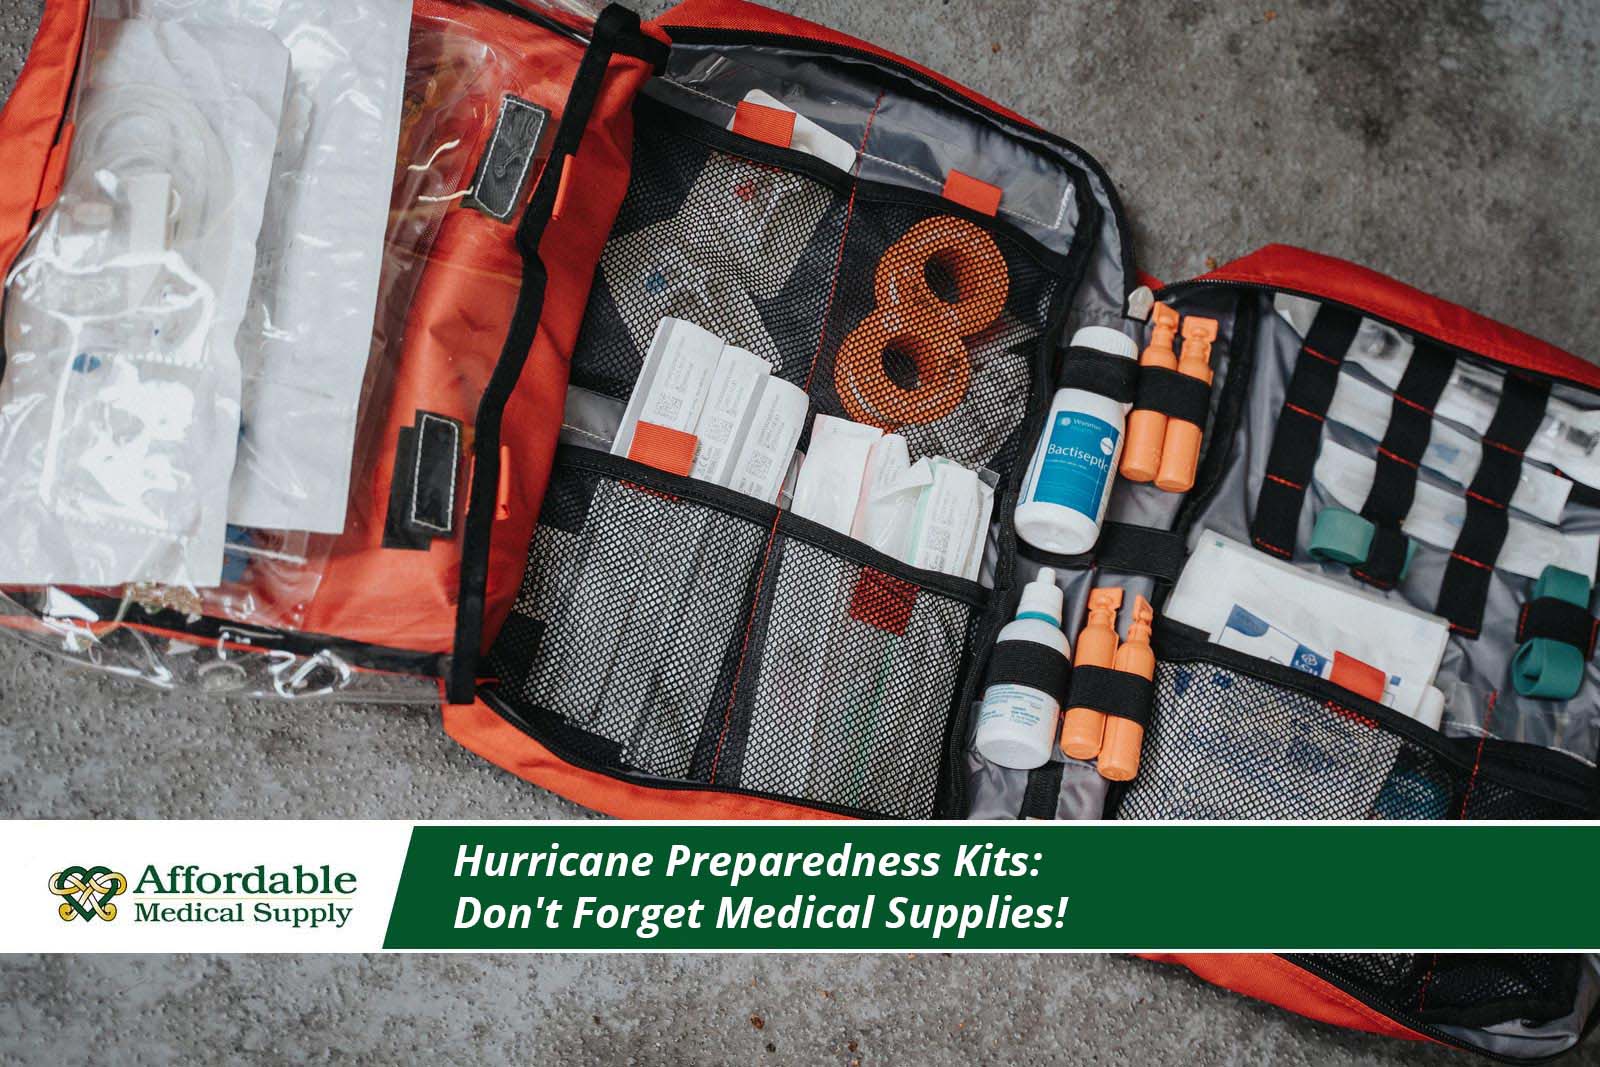 Must-have hurricane supplies